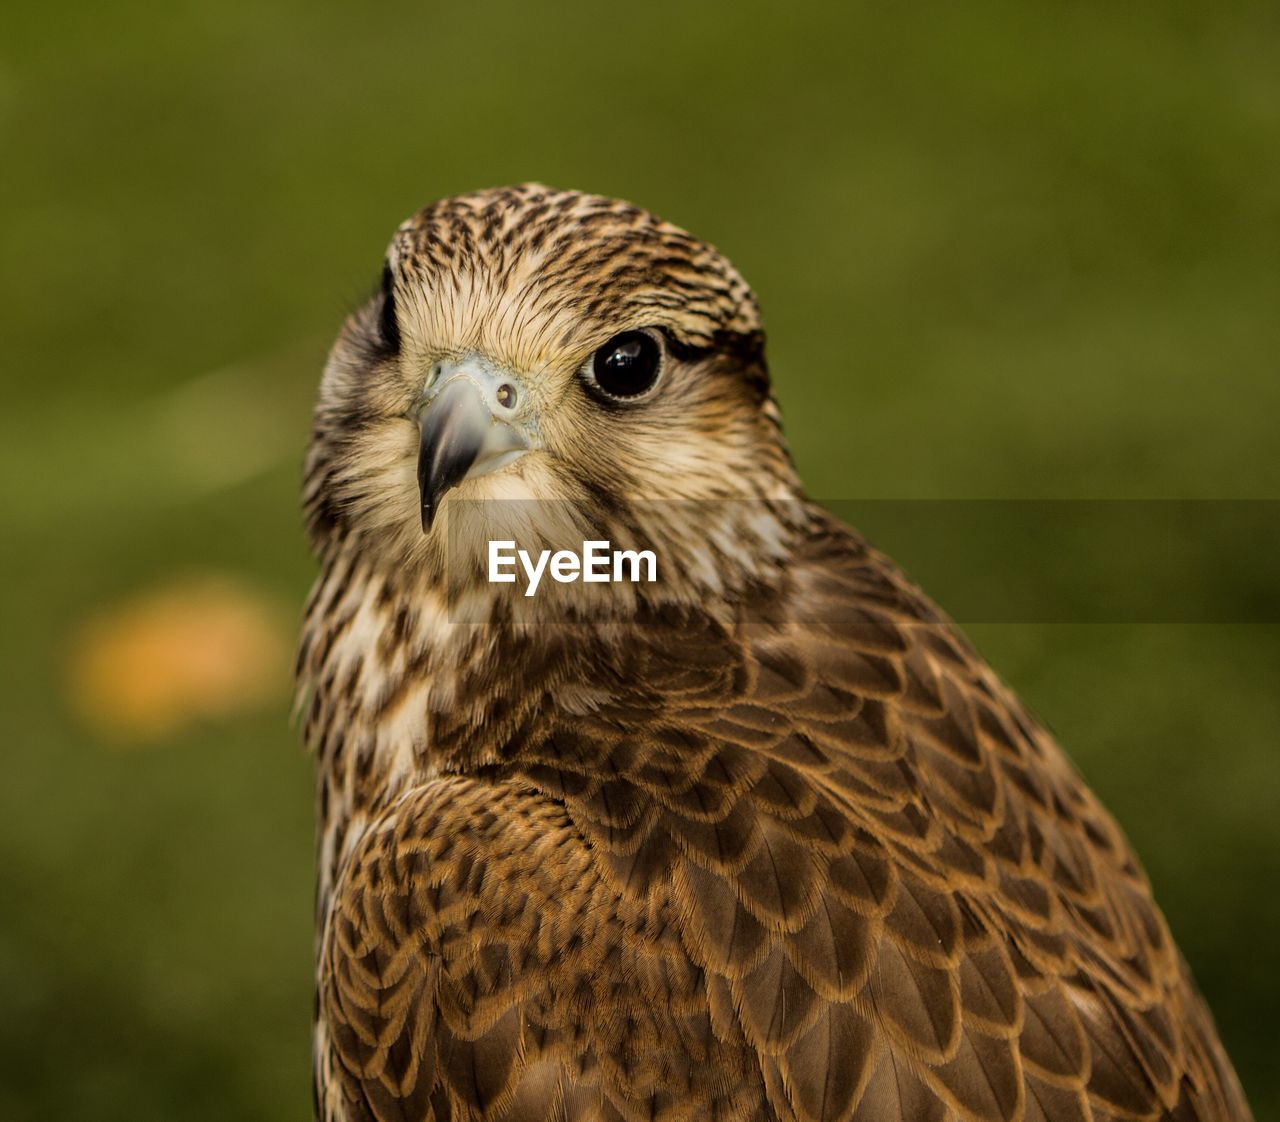 Close-up portrait of falcon